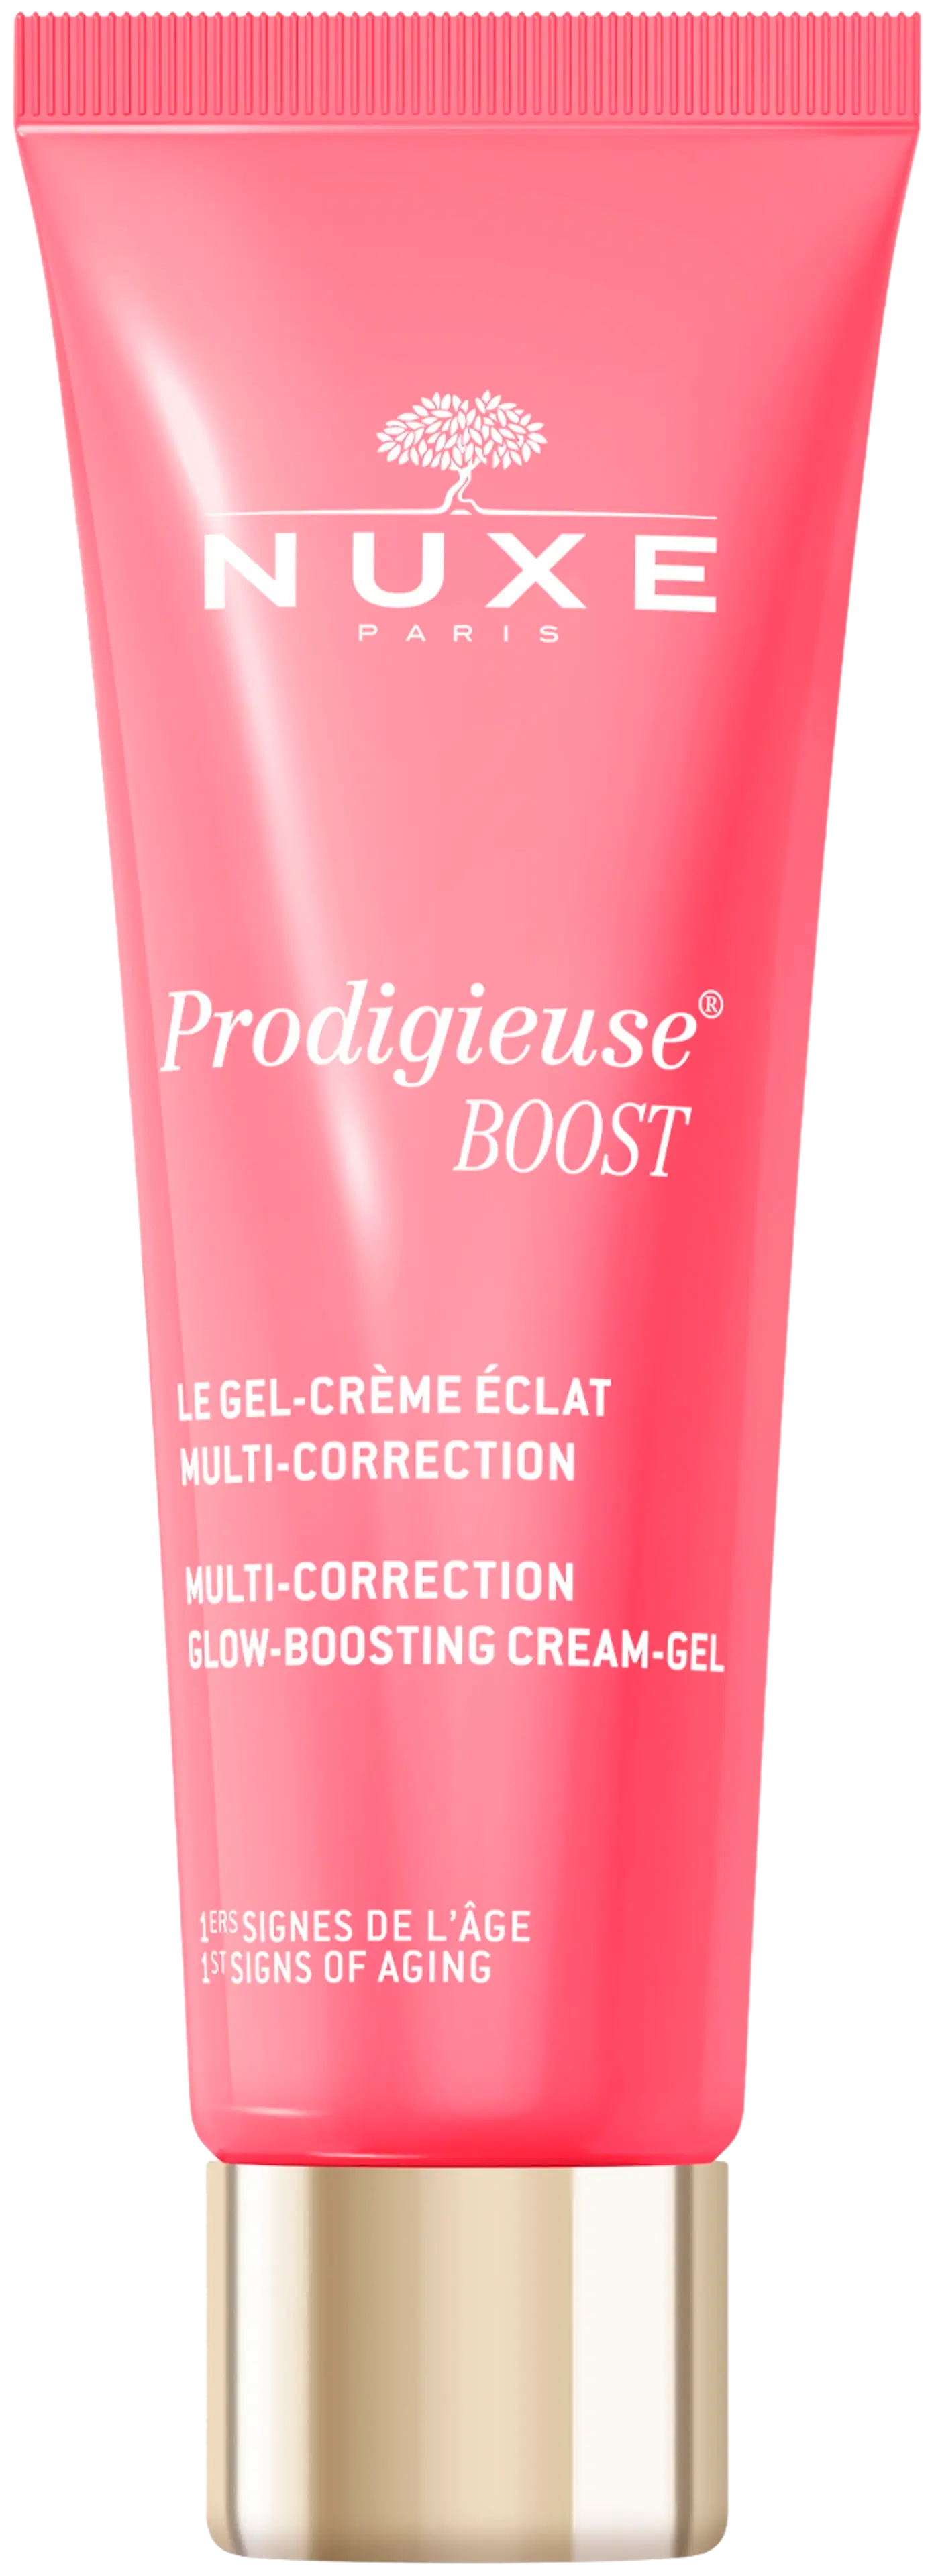 Nuxe Prodigieuse Boost Multi-Correction Glow-Boosting Cream-Gel heleyttävä geelivoide kasvoille 40 ml